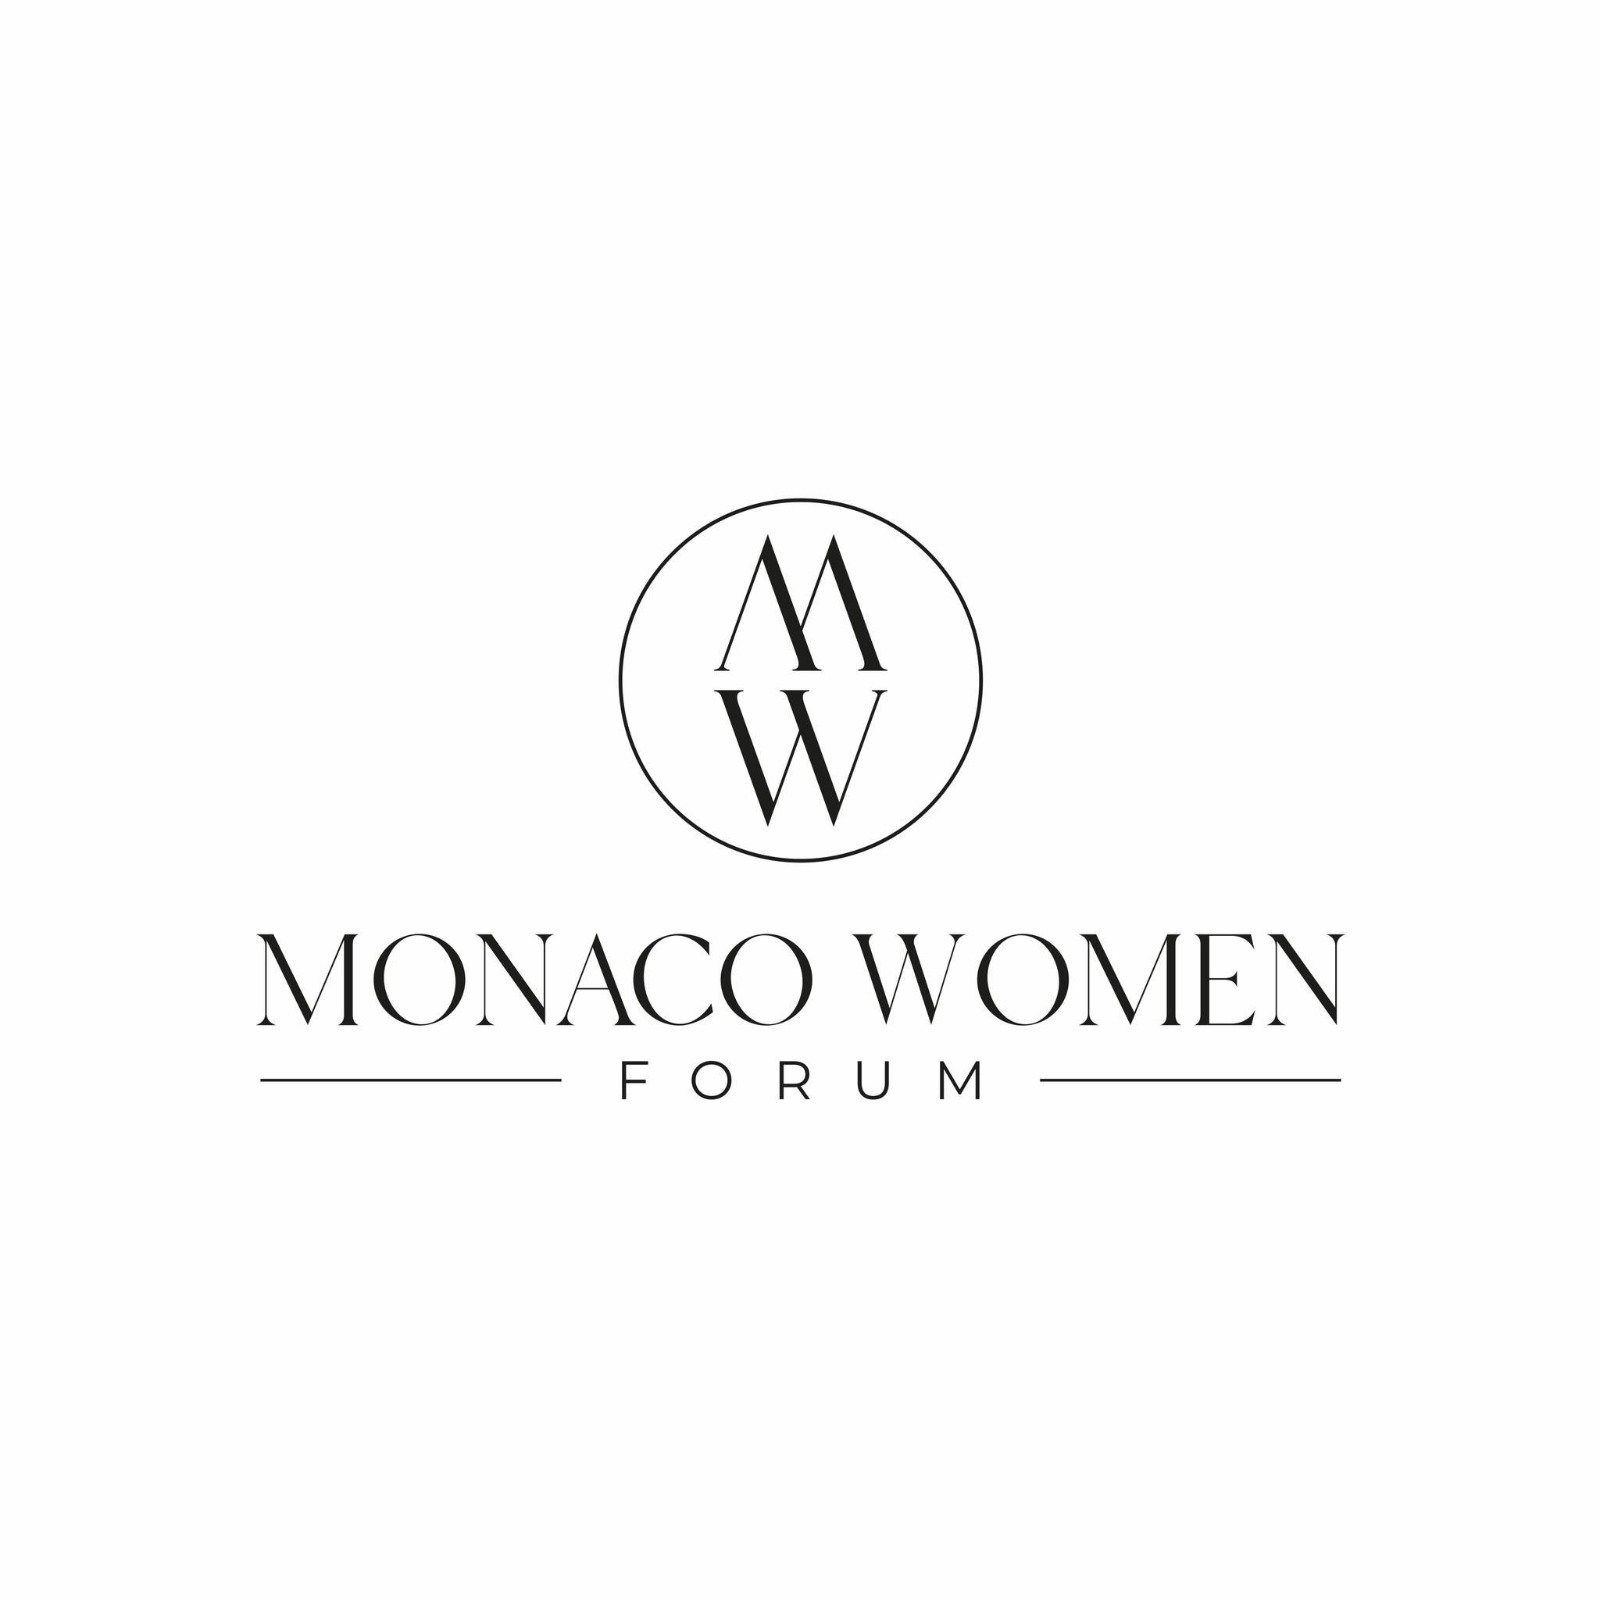 Women Forum Monaco